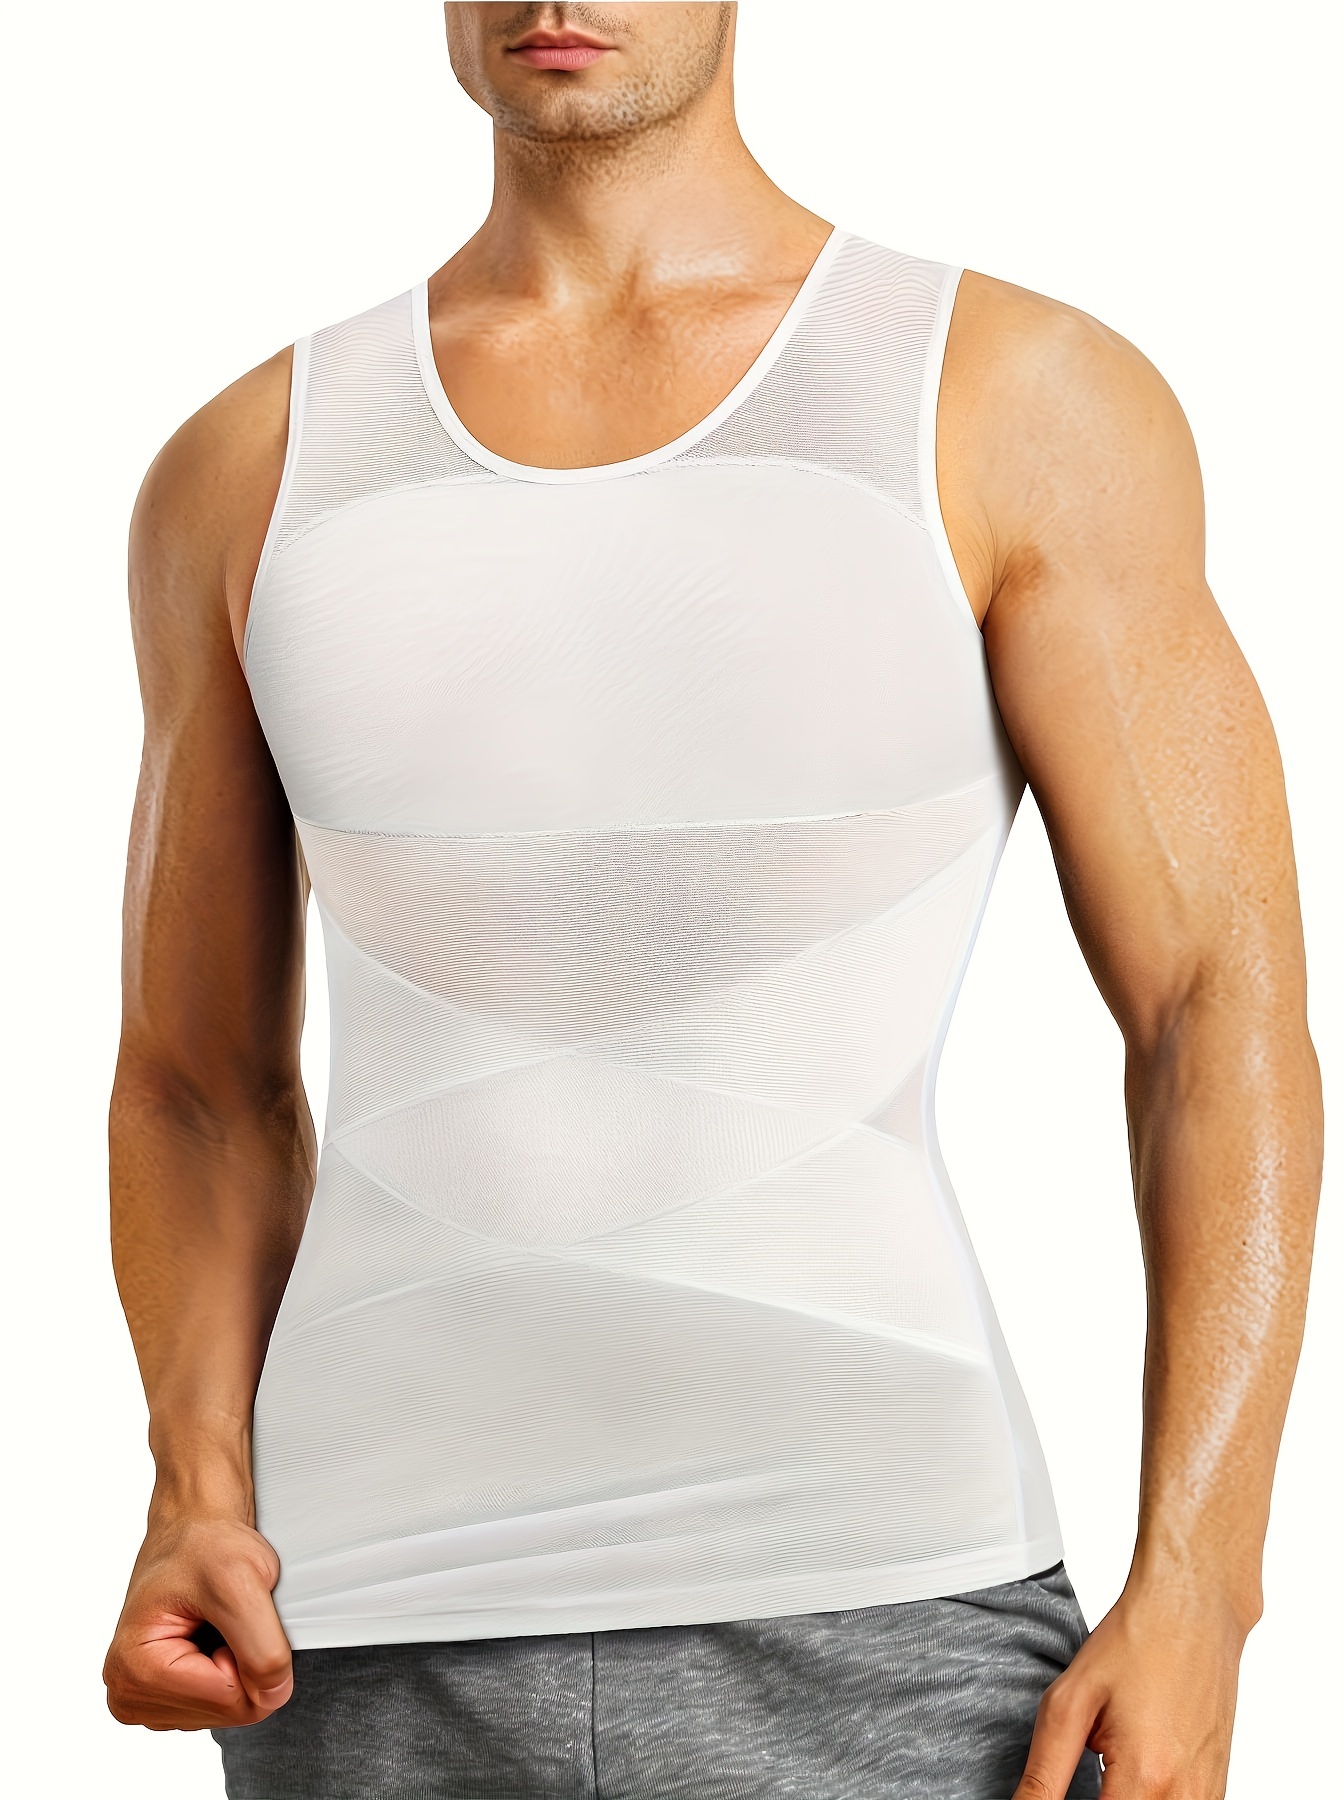 Mens Slimming Body Shaper Underwear Corset Compression Vest